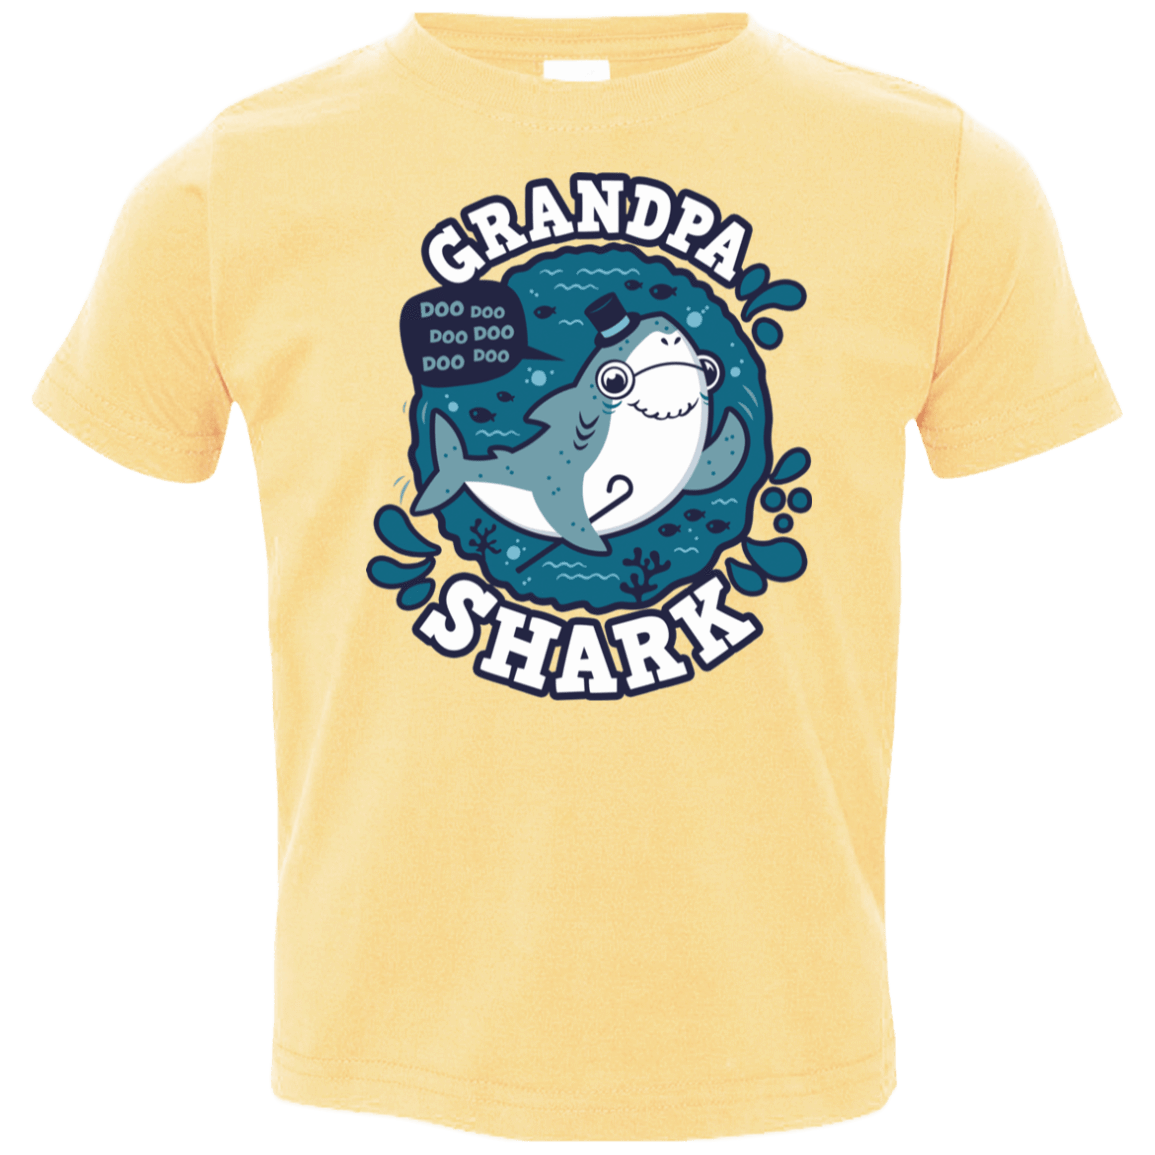 T-Shirts Butter / 2T Shark Family trazo - Grandpa Toddler Premium T-Shirt